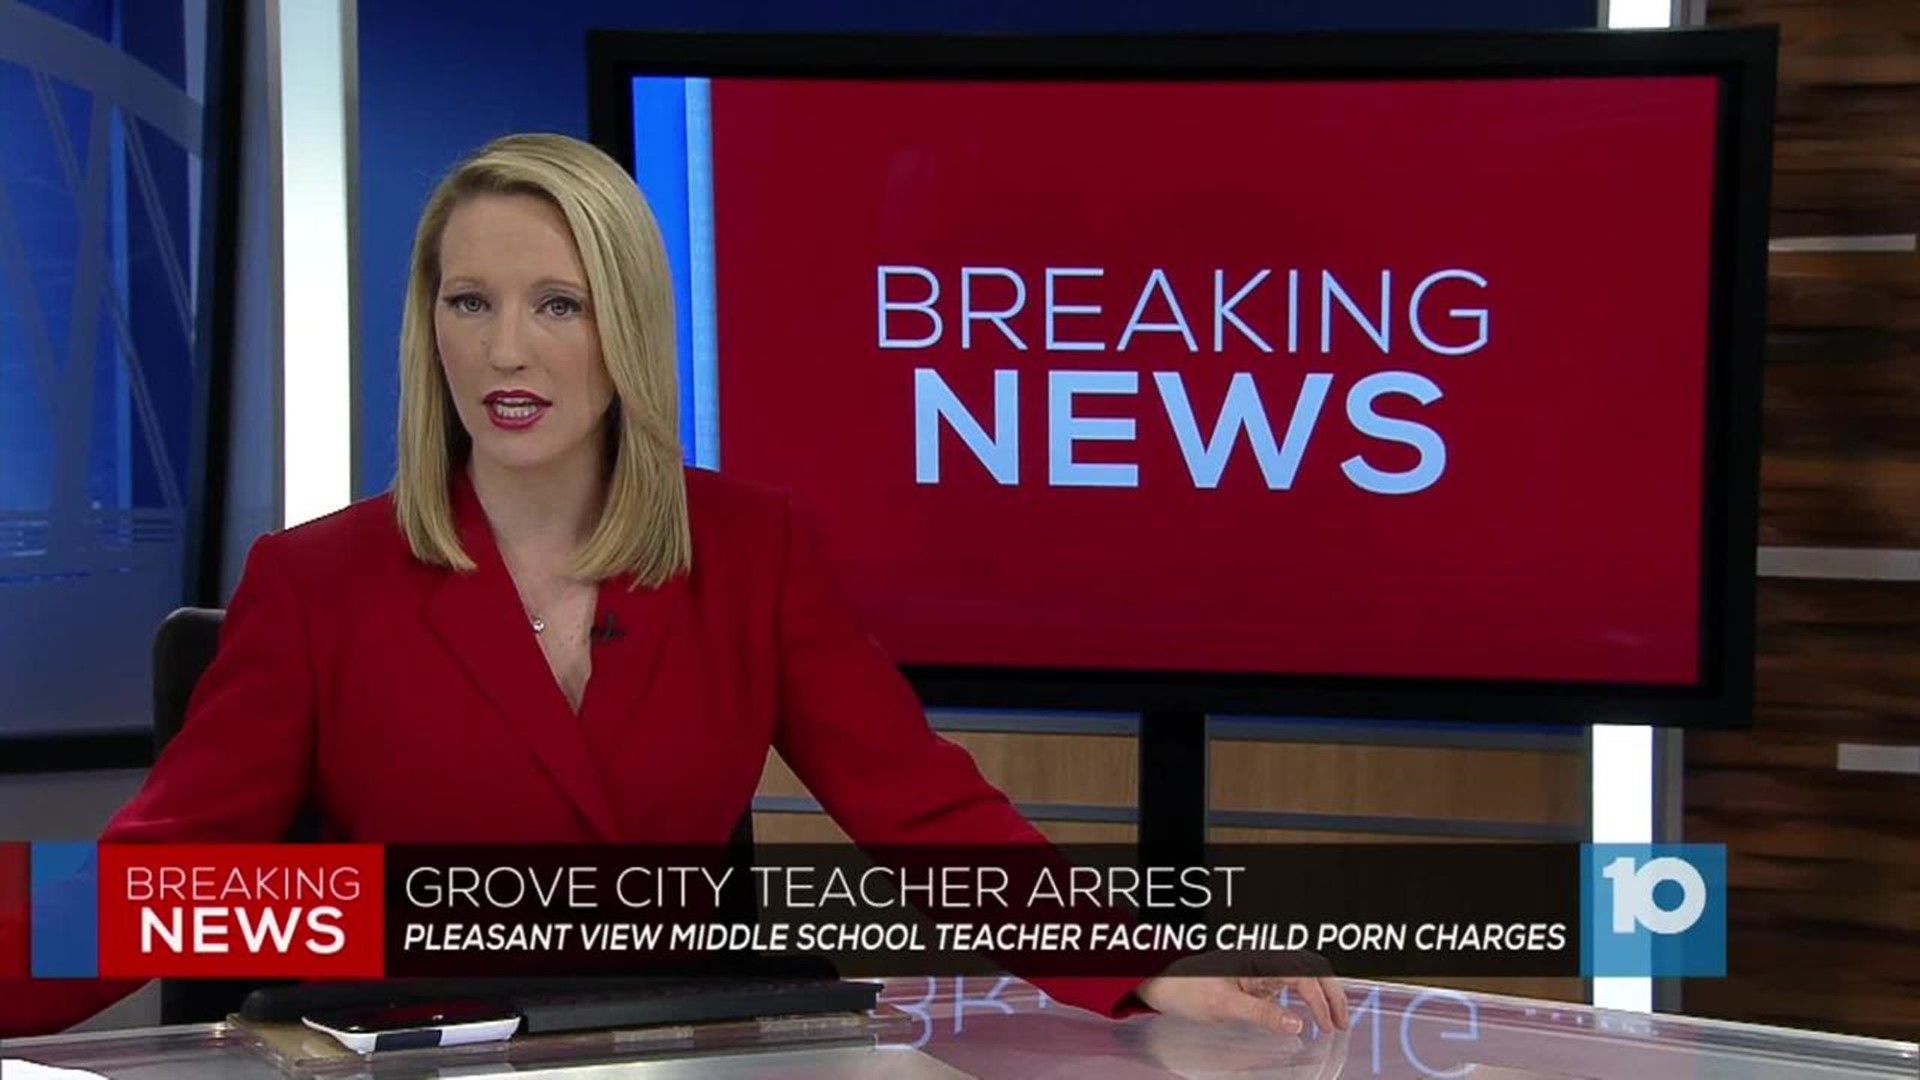 Middle School Teacher Arrested For Child Porn 10tvcom